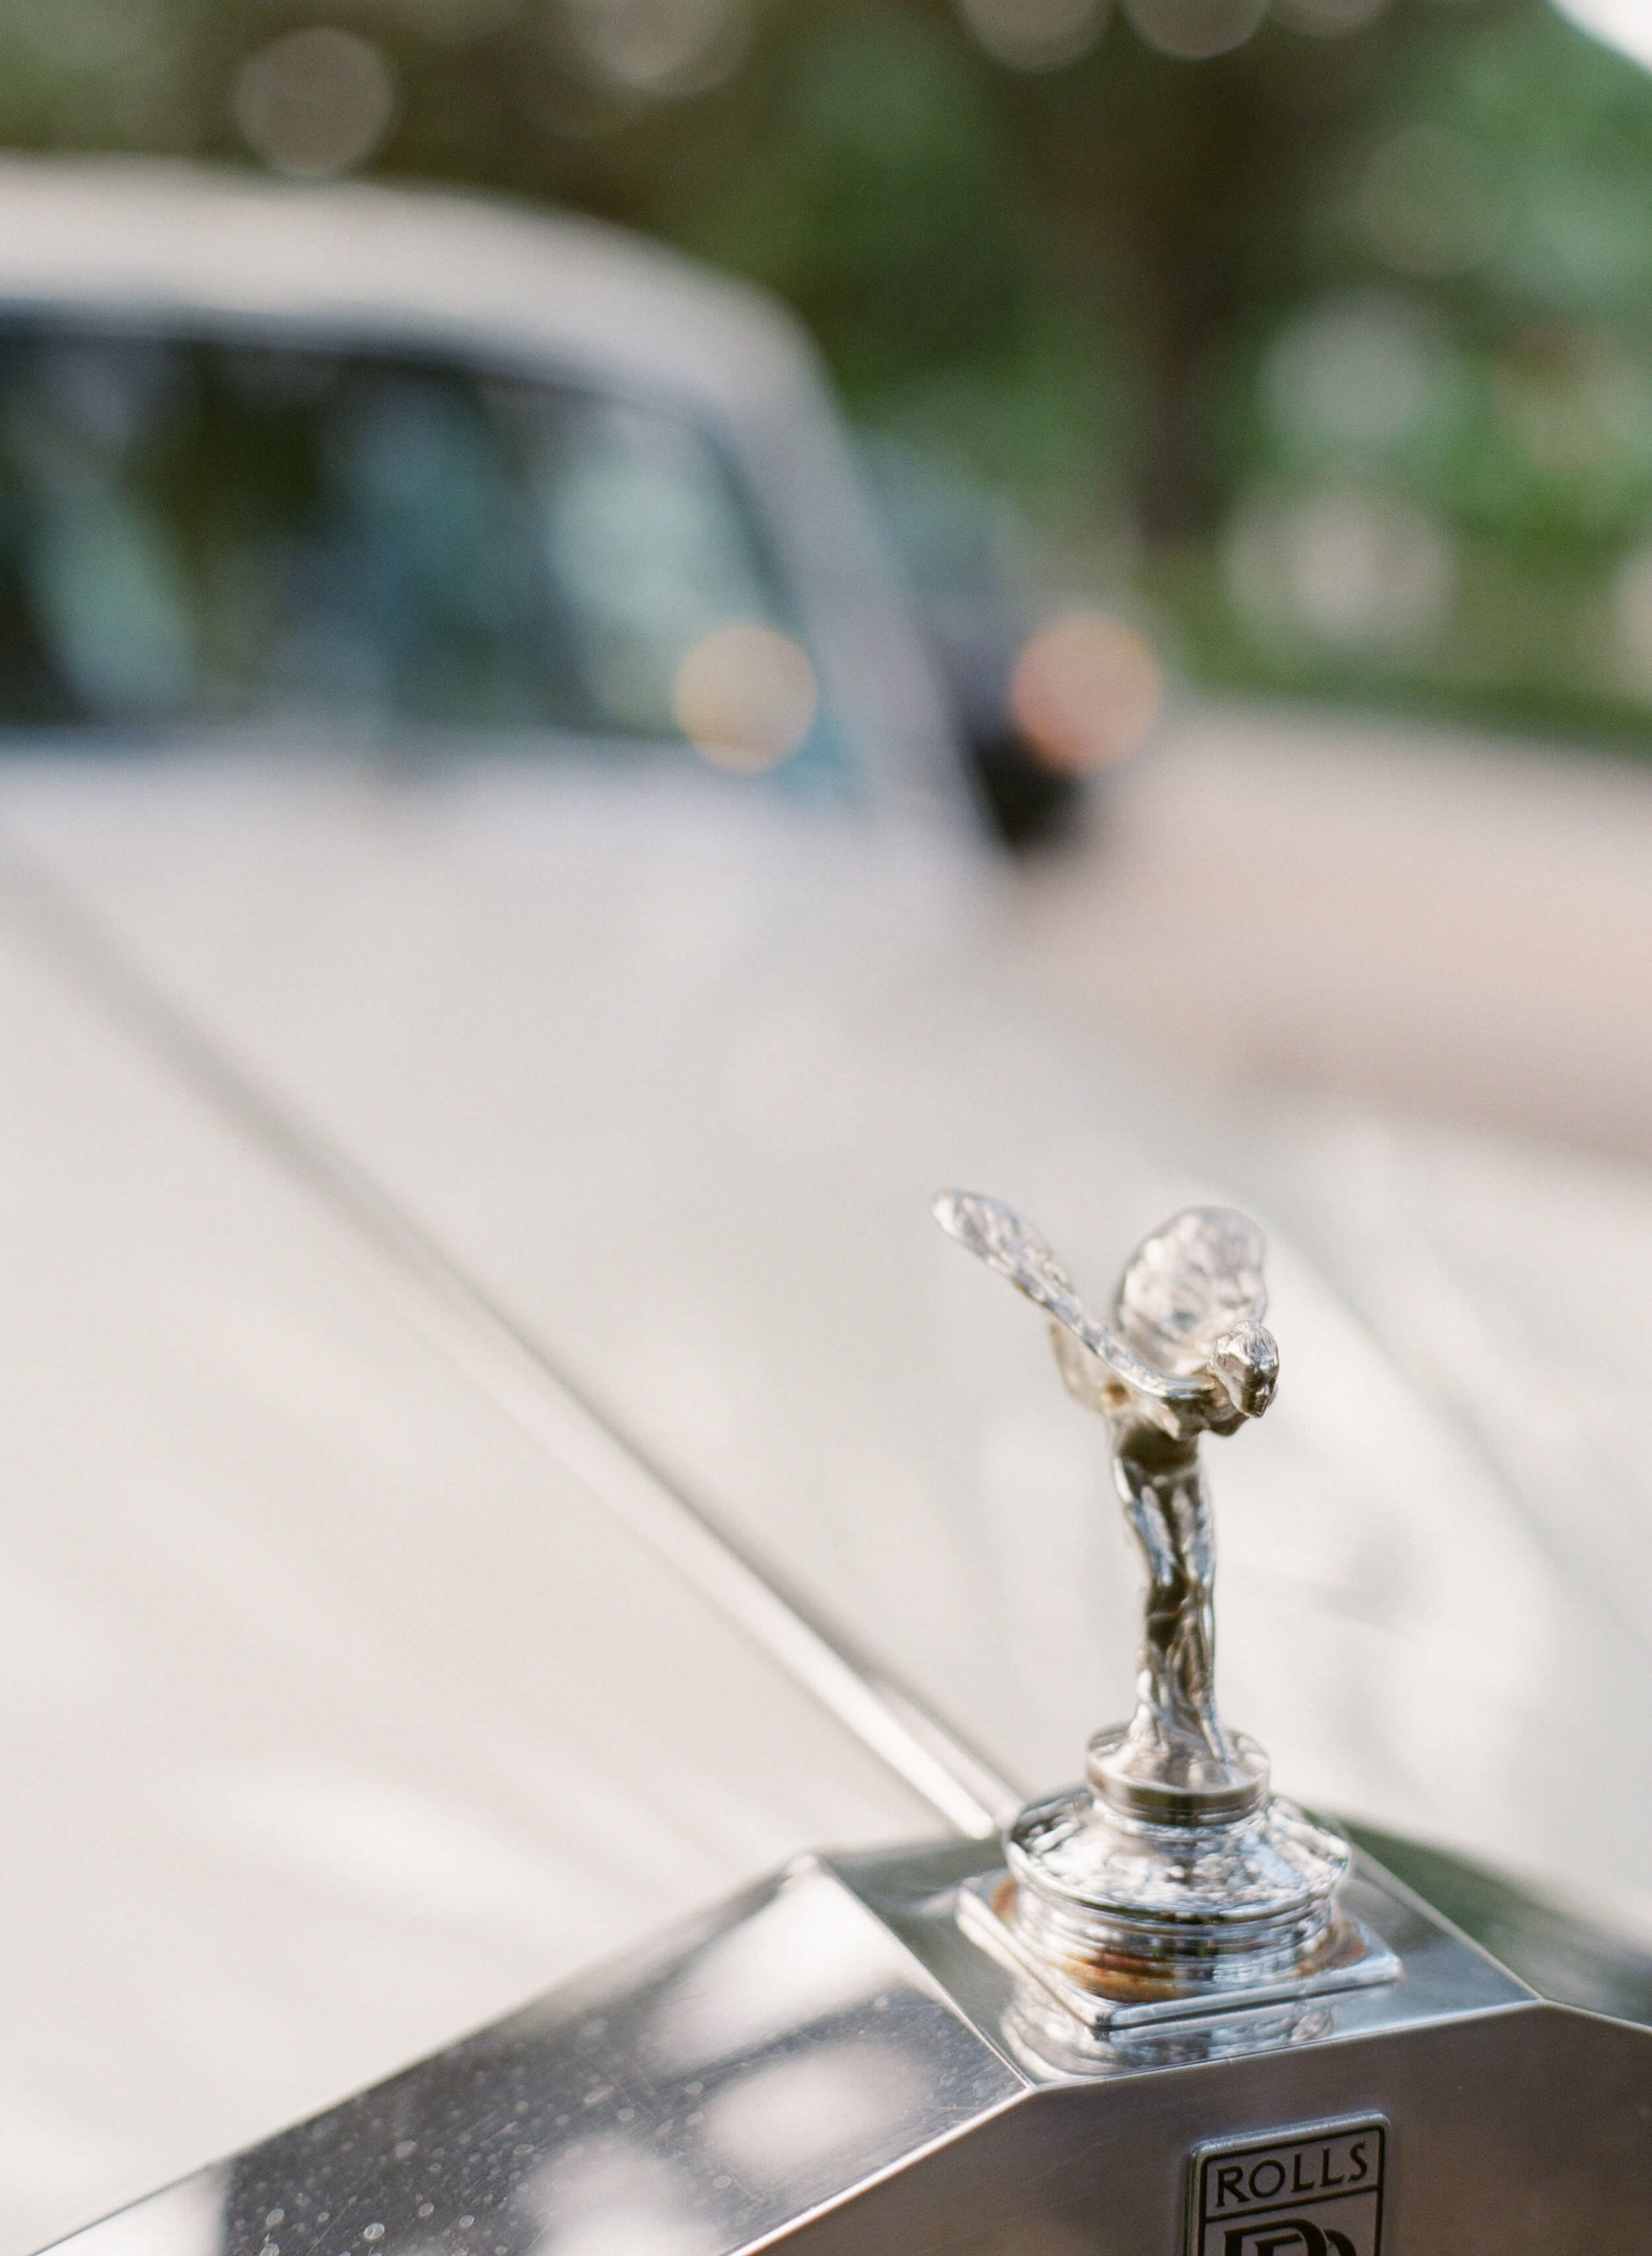 Closeup up Rolls Royce